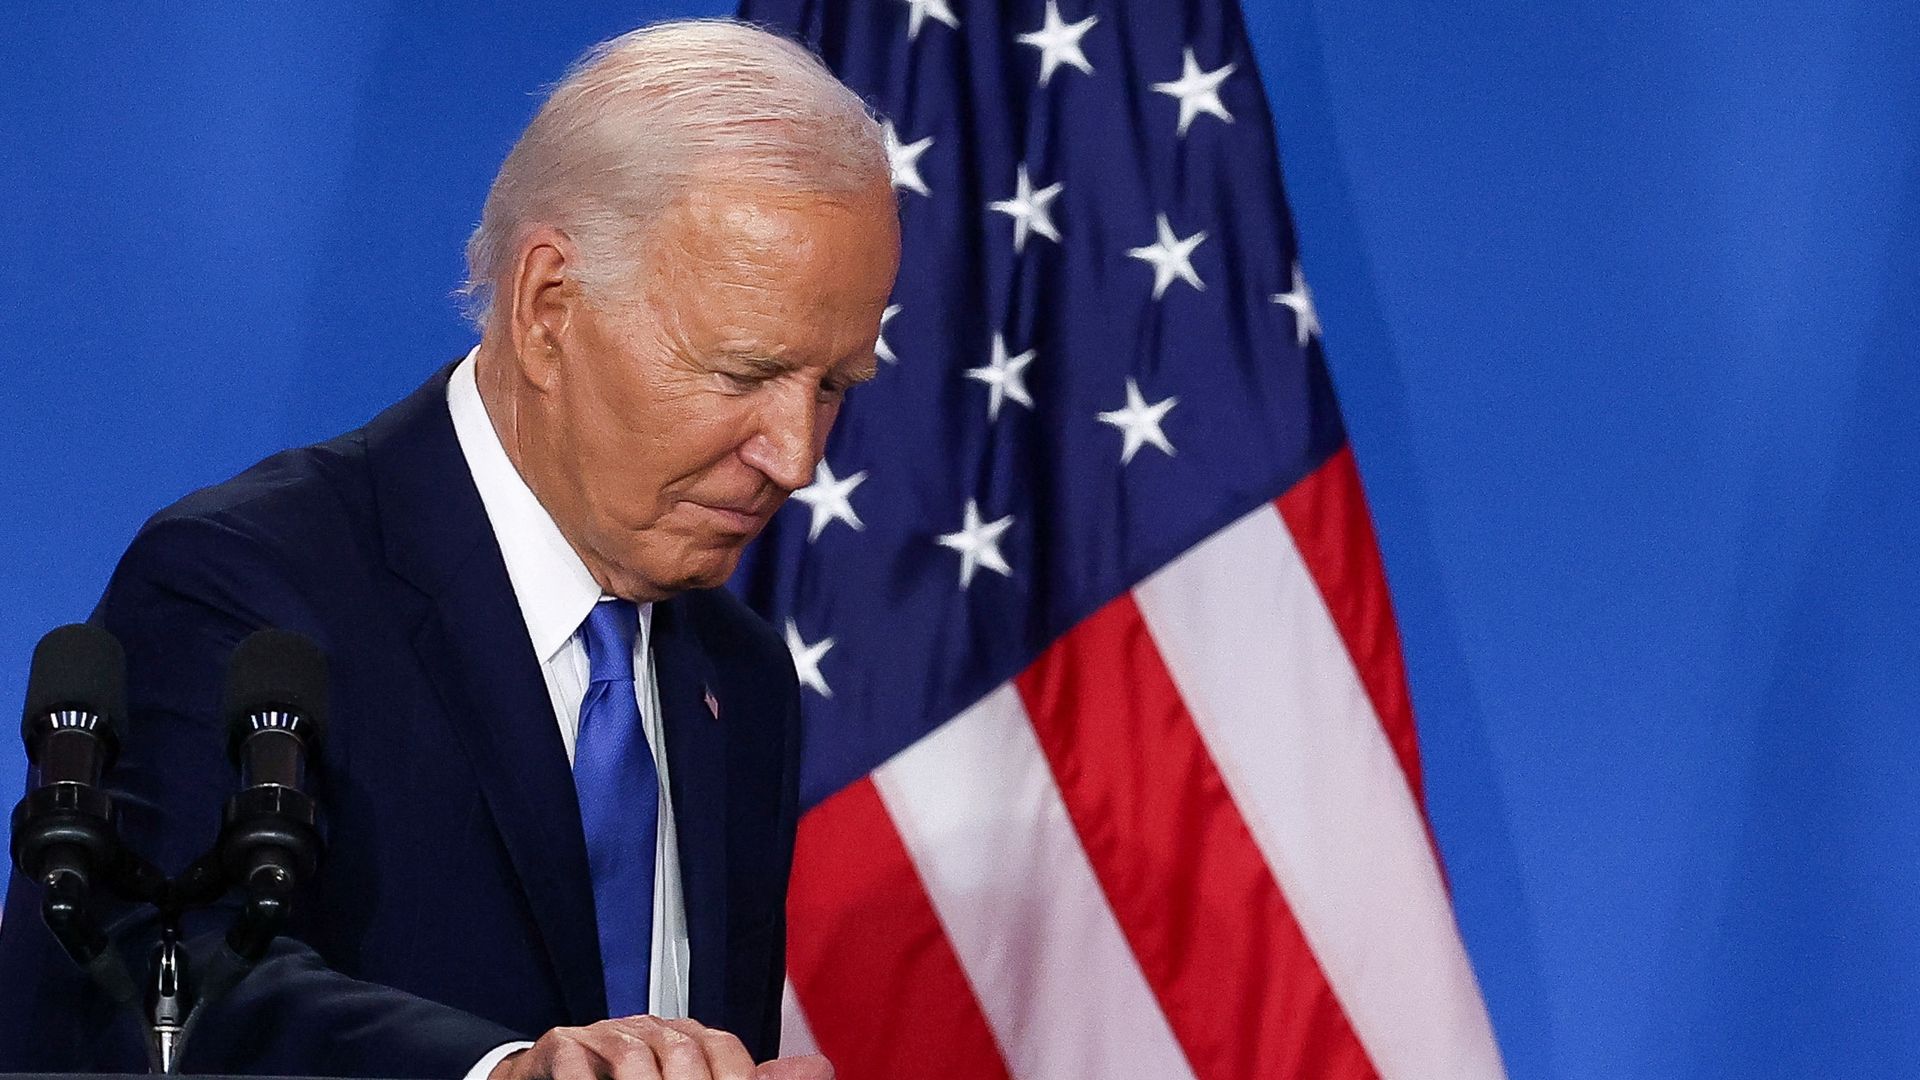 Biden under mounting pressure from Democrats to ditch re-election bid